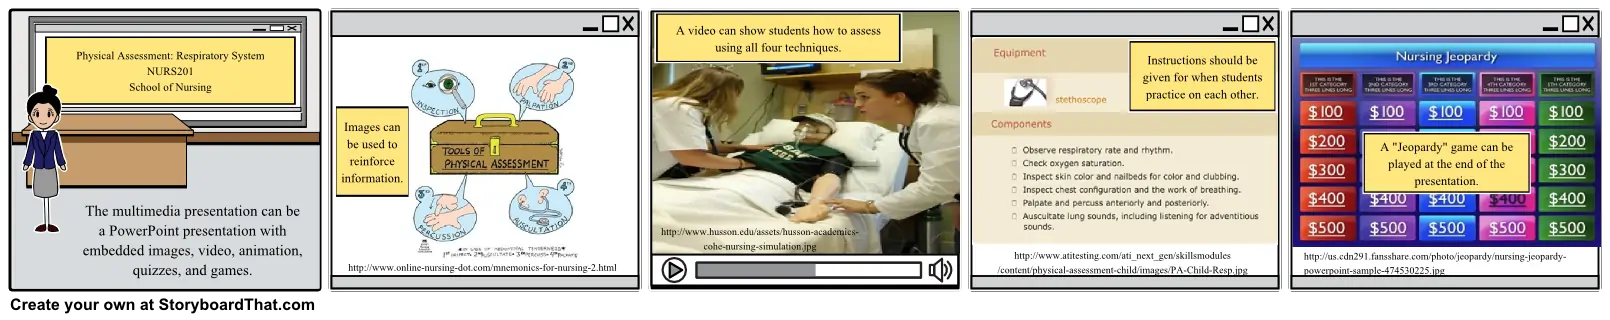 Multimedia presentaion in nursing education